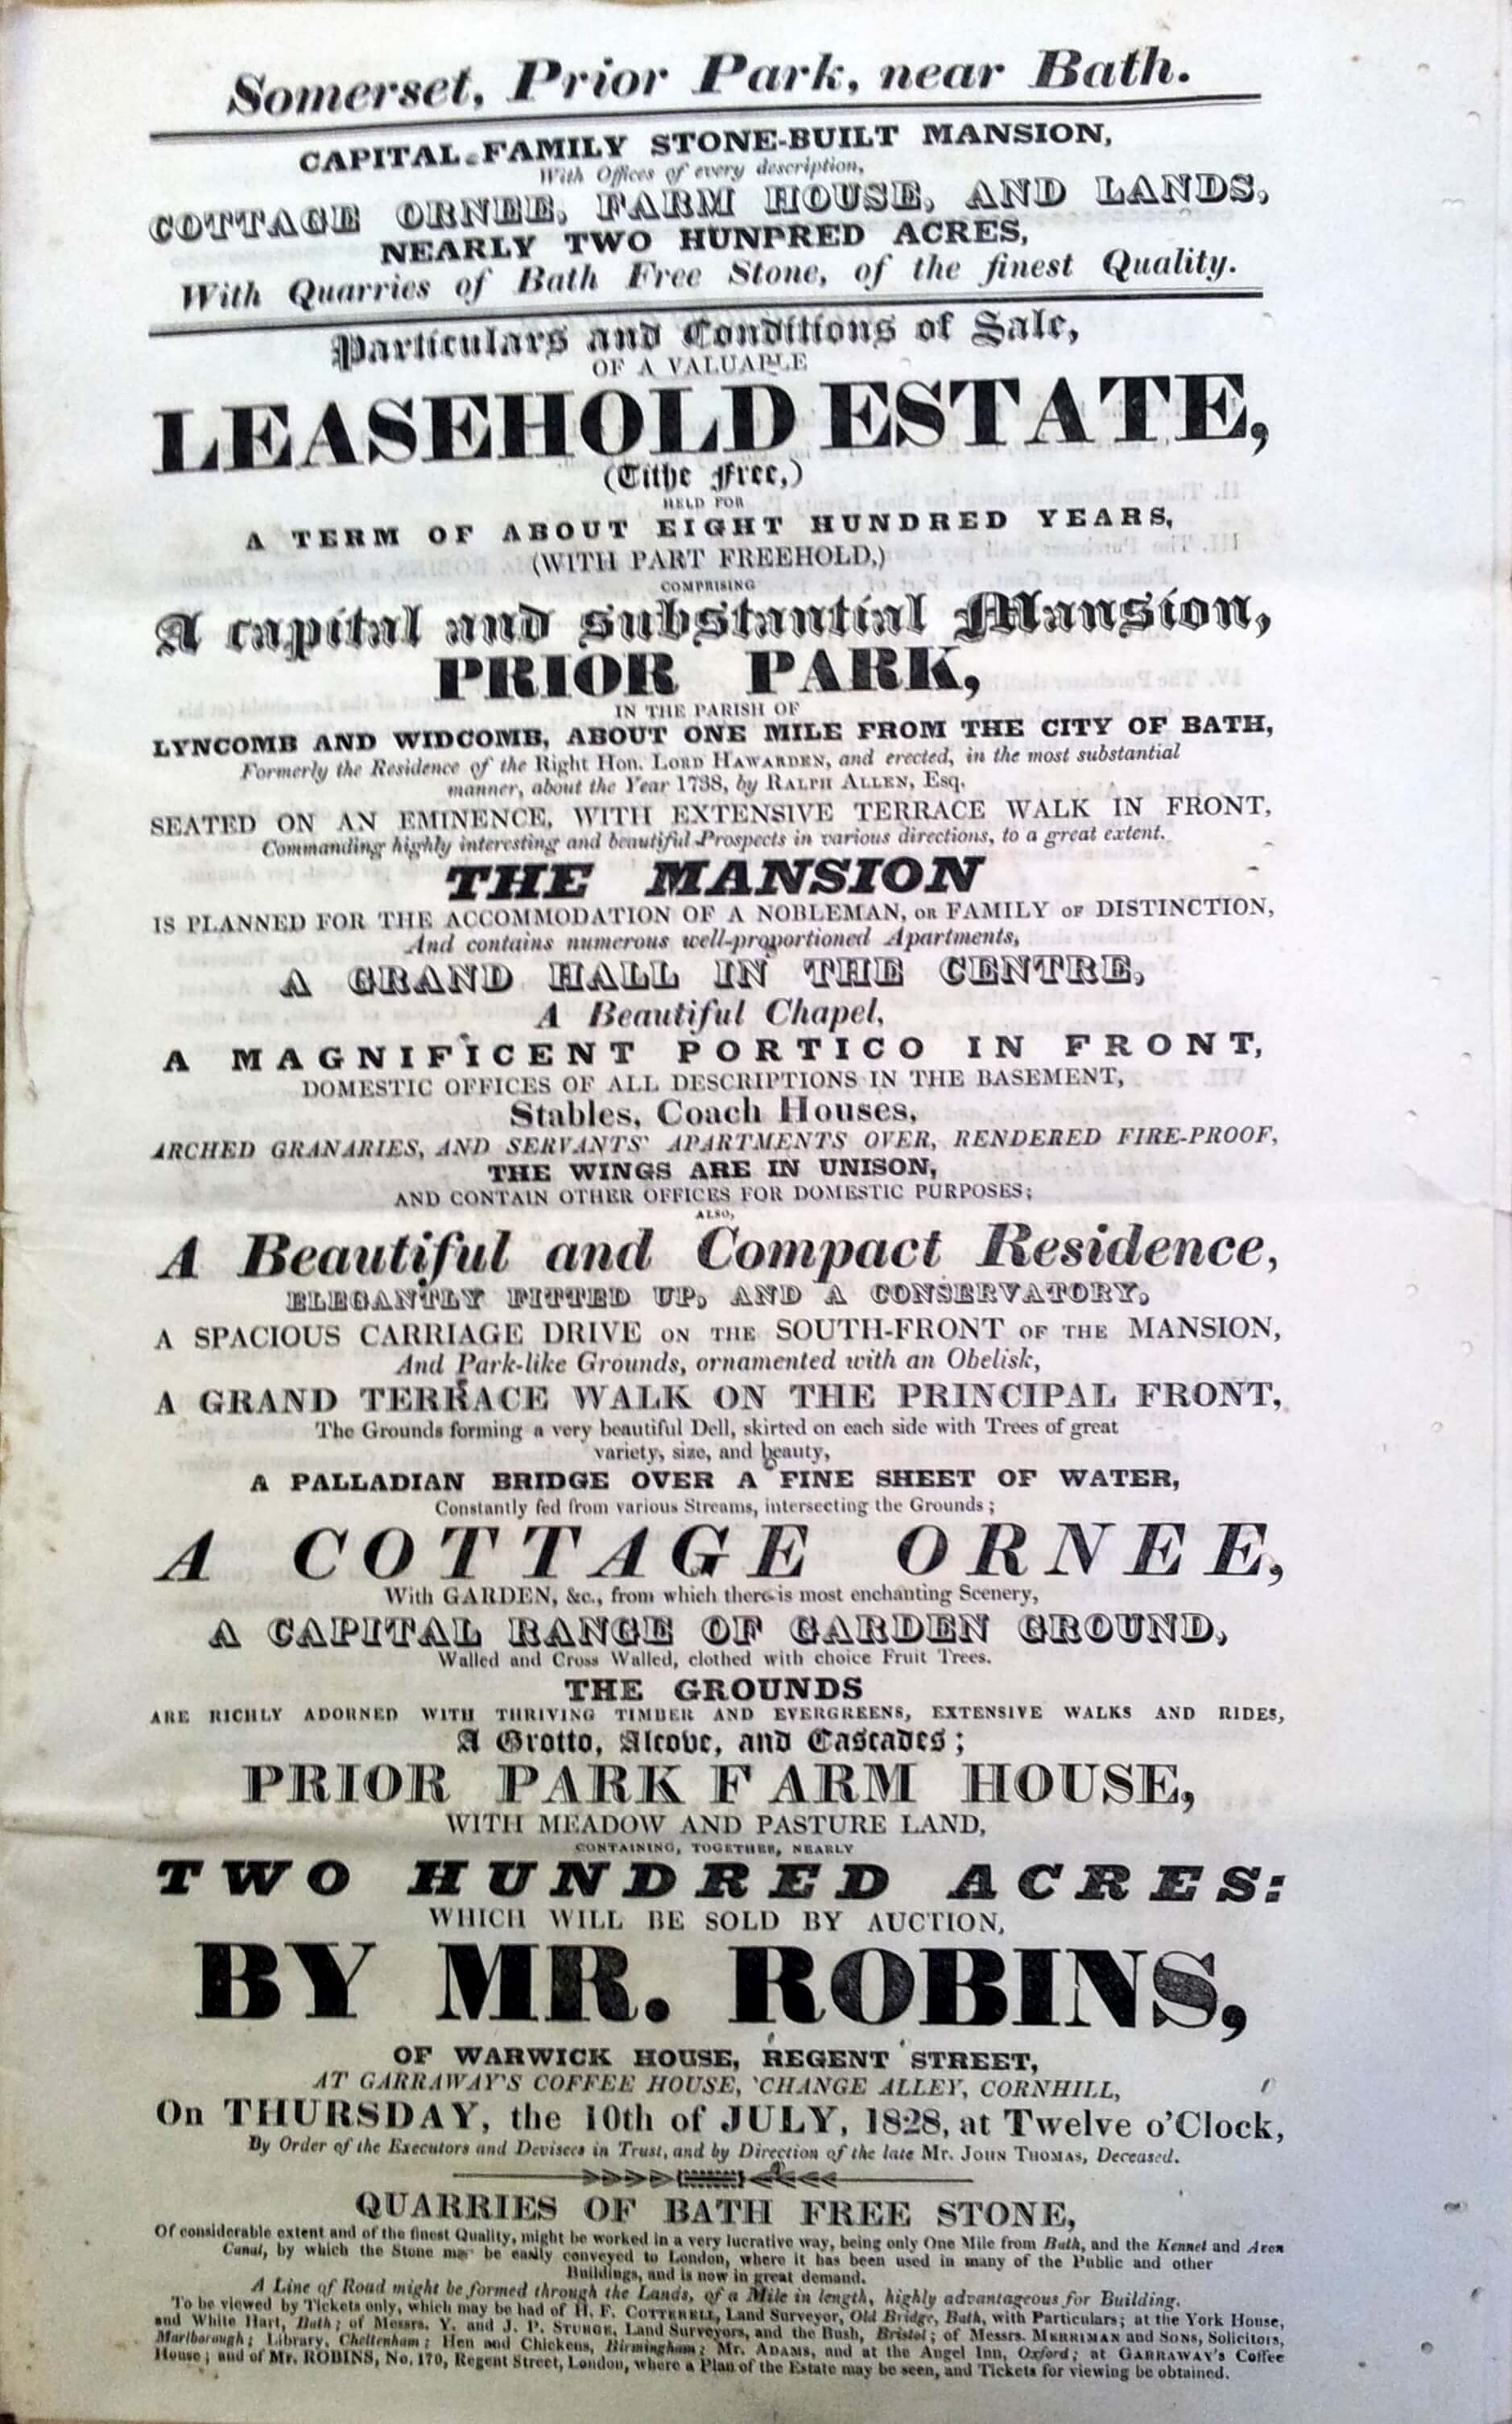 Sale of Prior Park, 10 July 1828